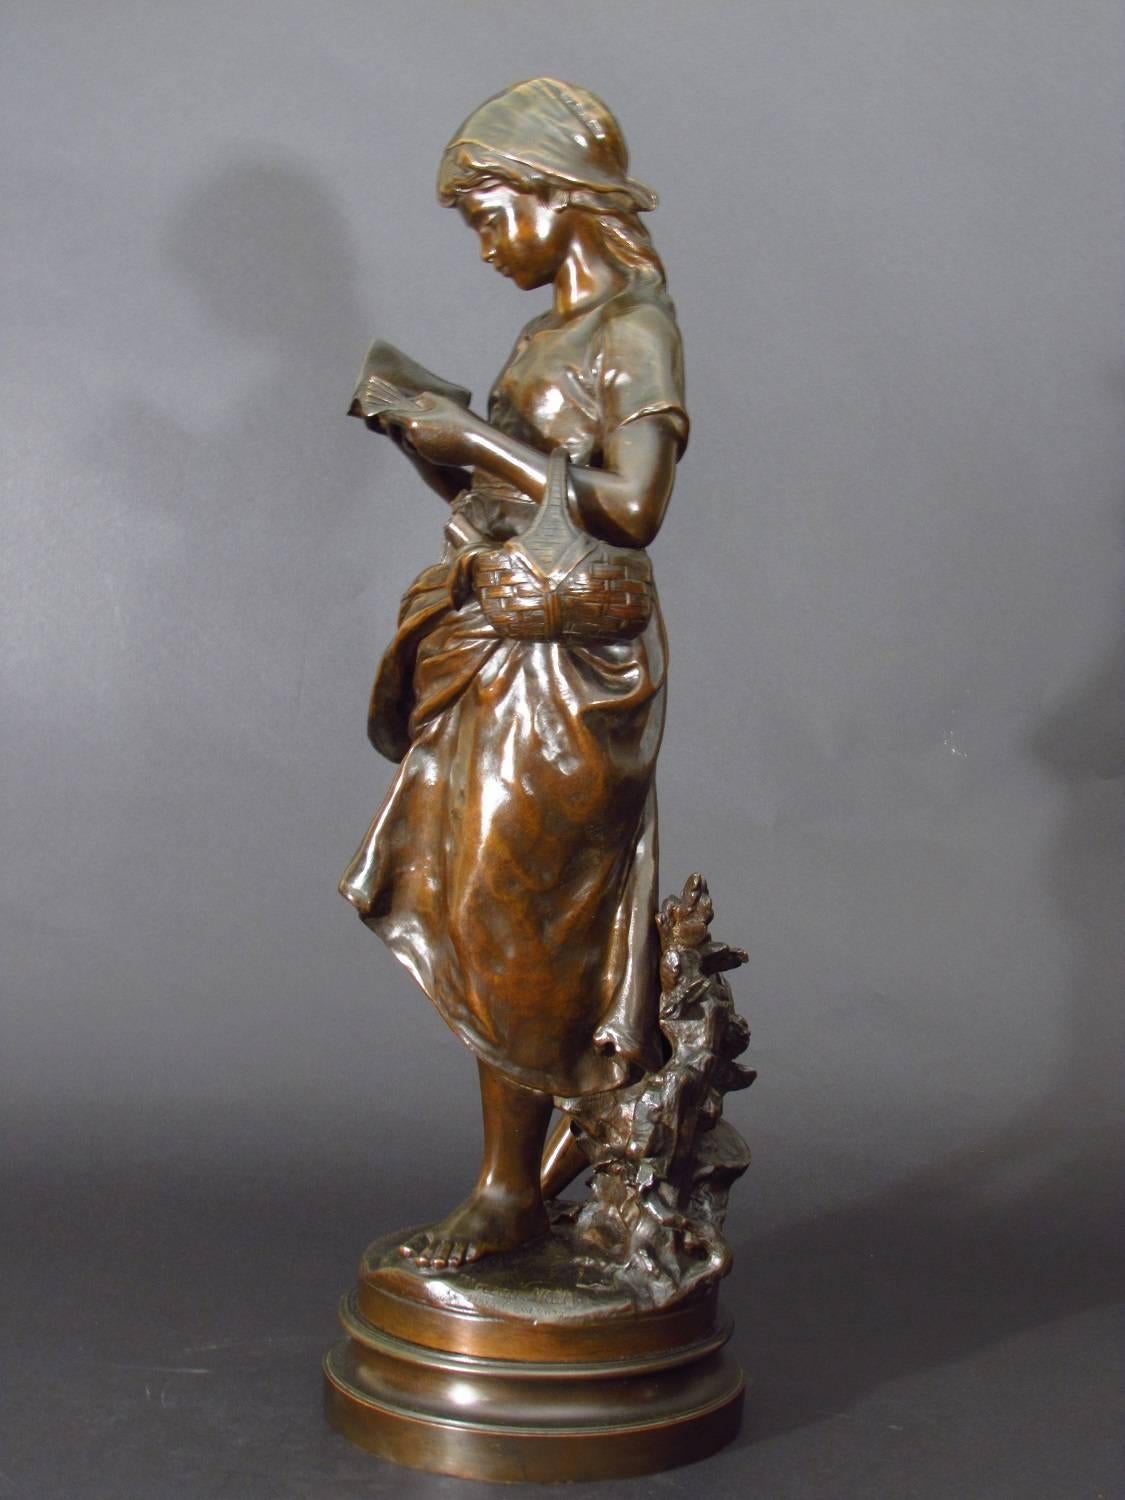      Liseuse - Gold Figurative Sculpture by Mathurin Moreau